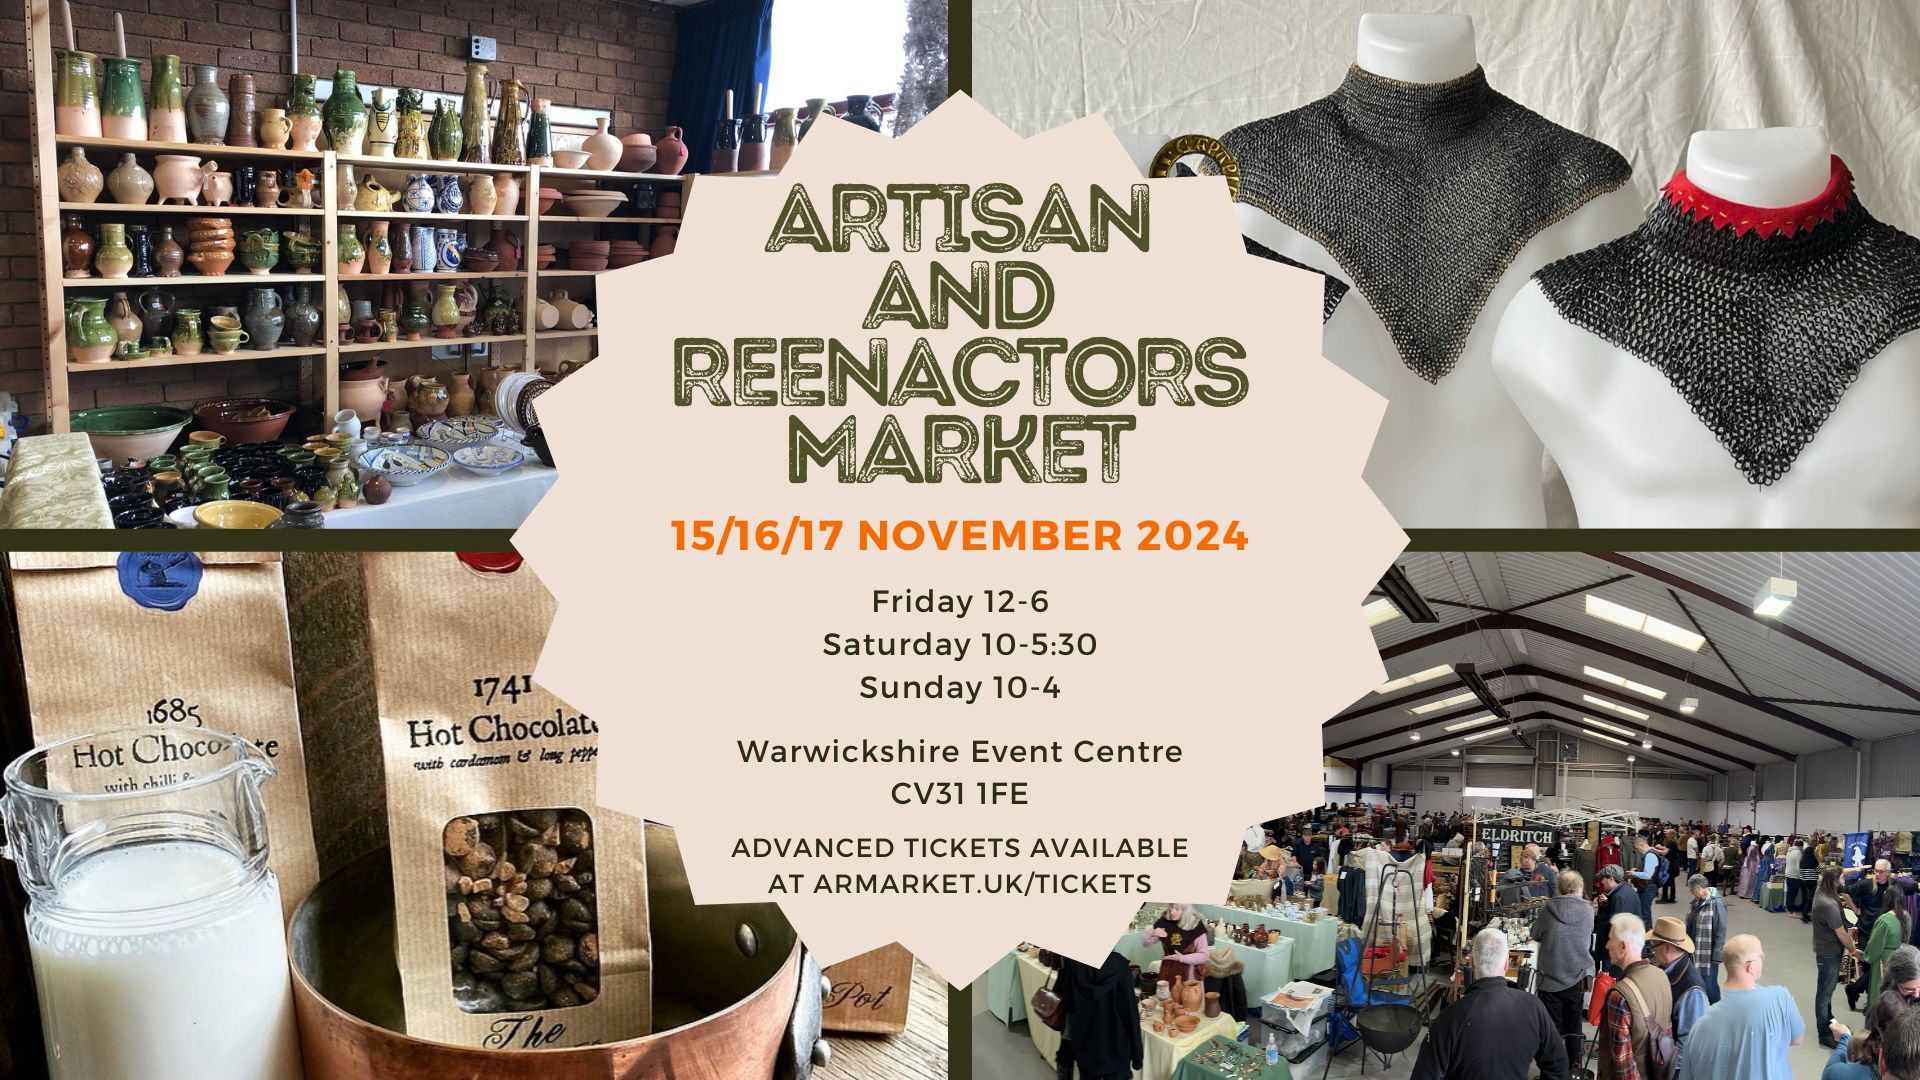 Next event - Artisans Market in November